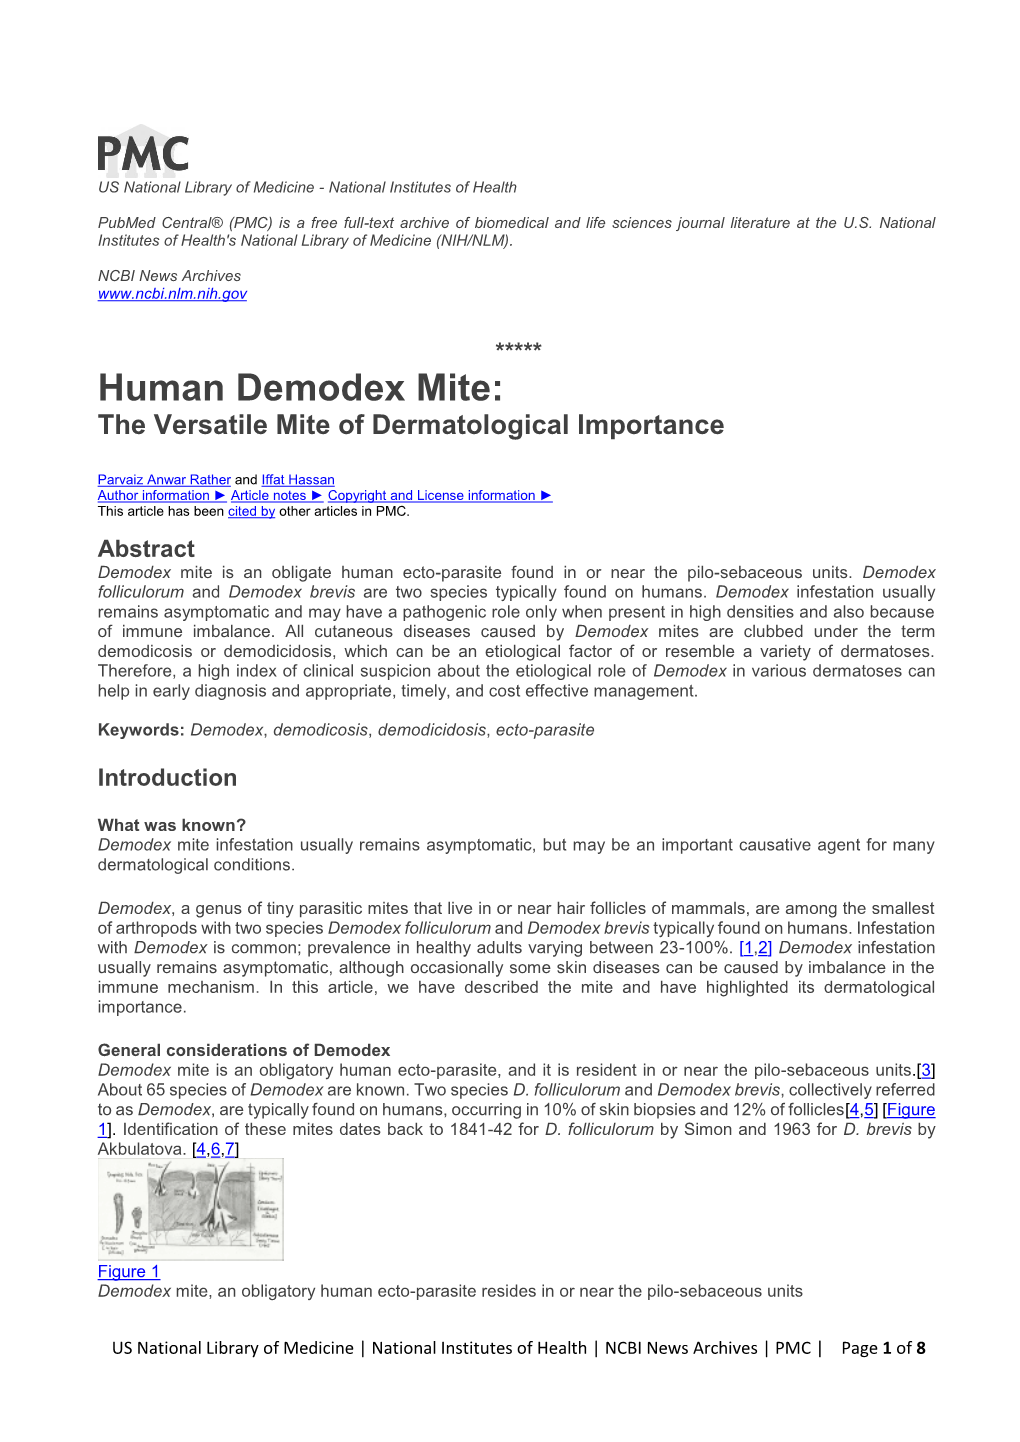 Human Demodex Mite: the Versatile Mite of Dermatological Importance